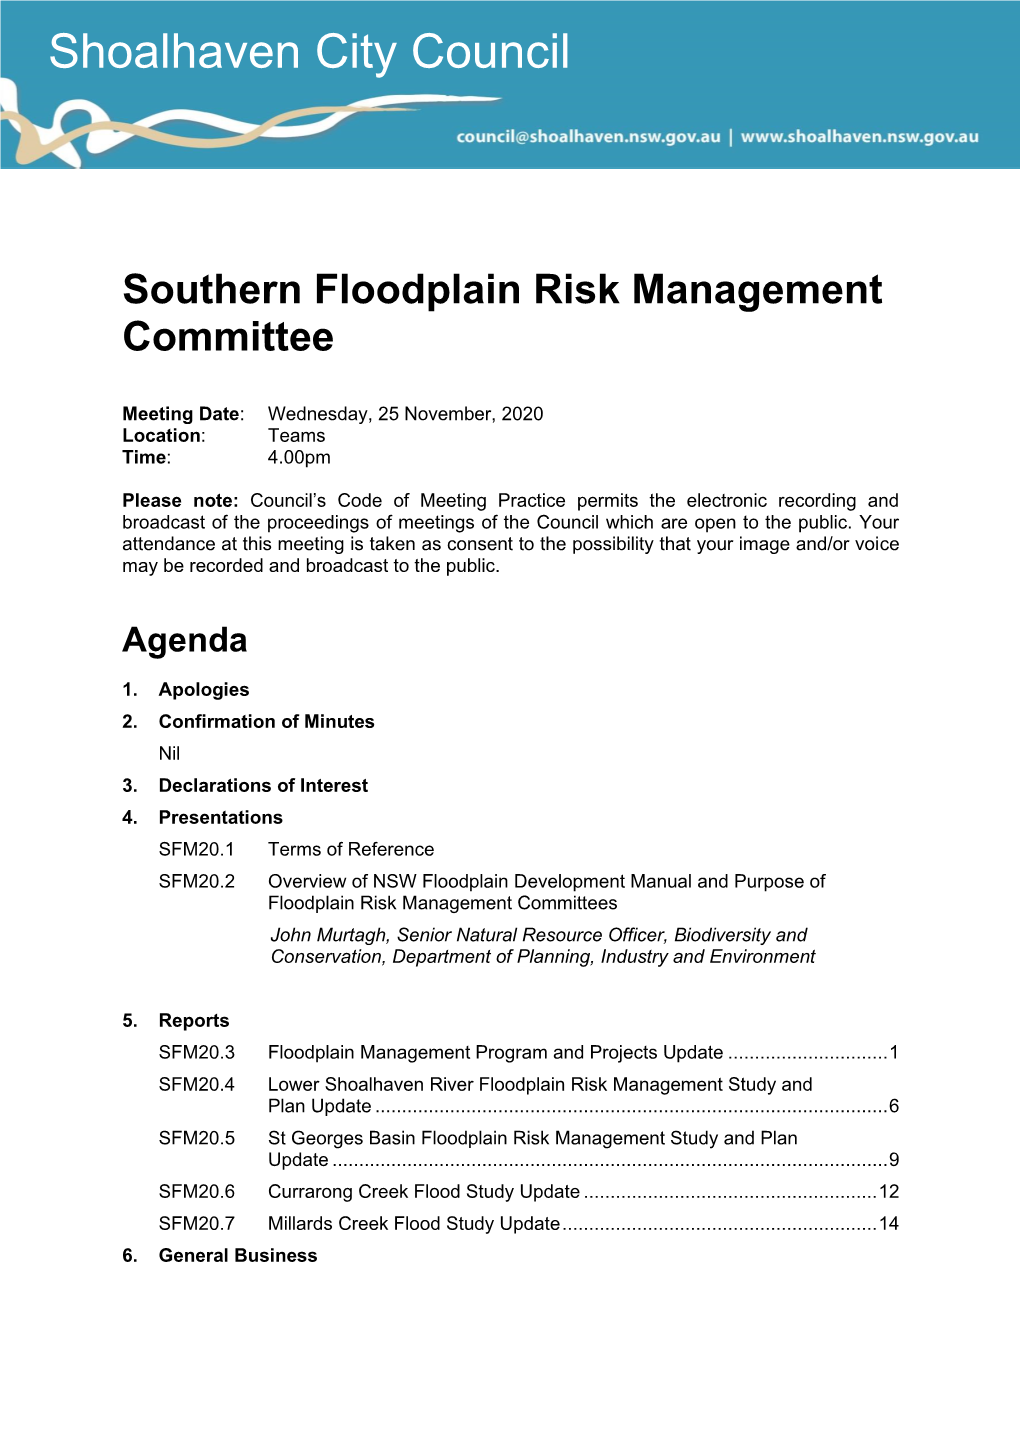 Agenda of Southern Floodplain Risk Management Committee